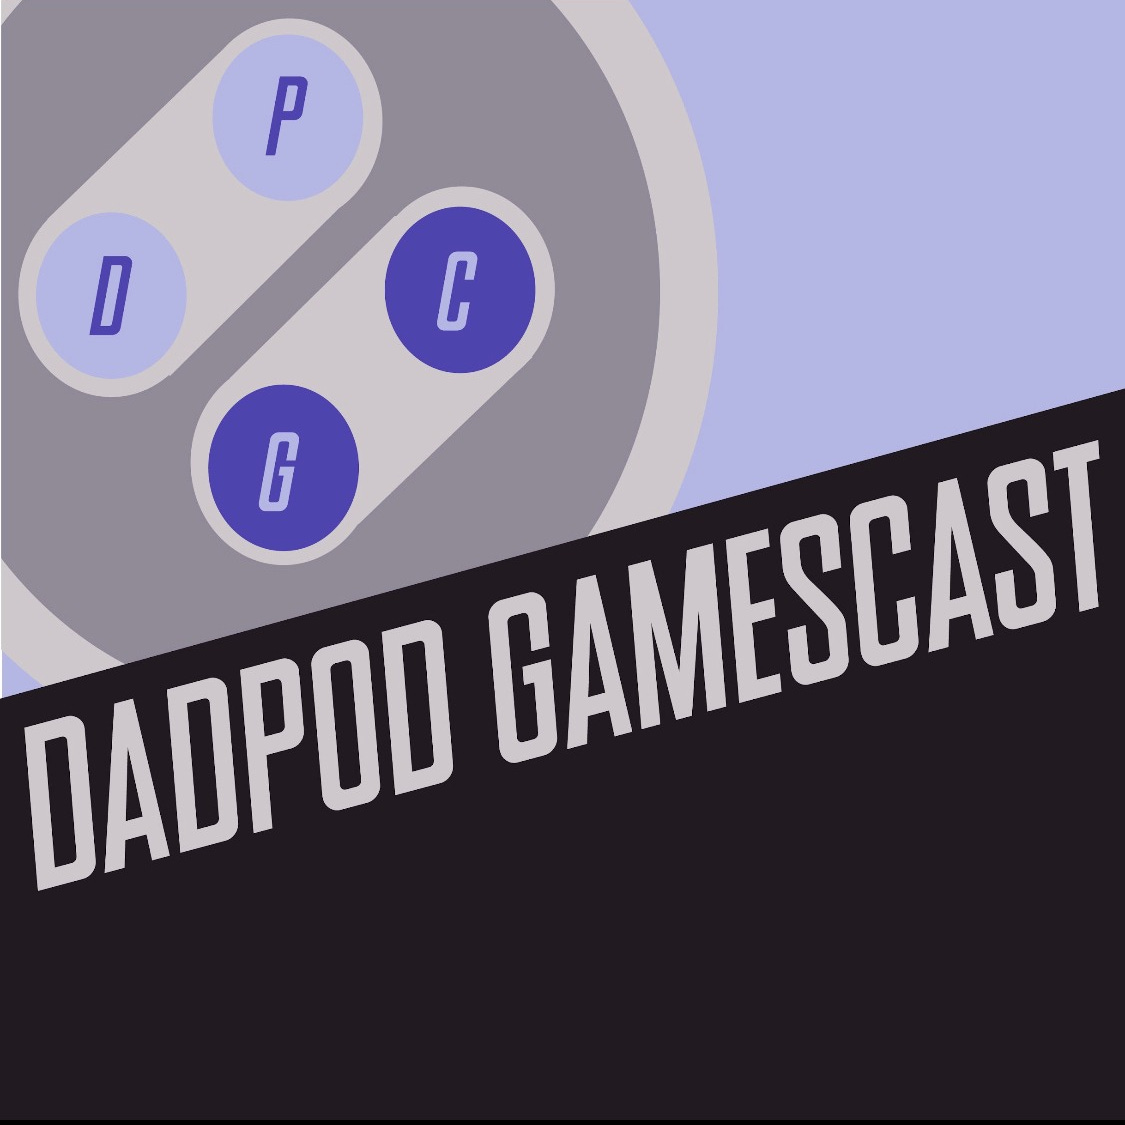 Artwork for Dadpod GamesCast